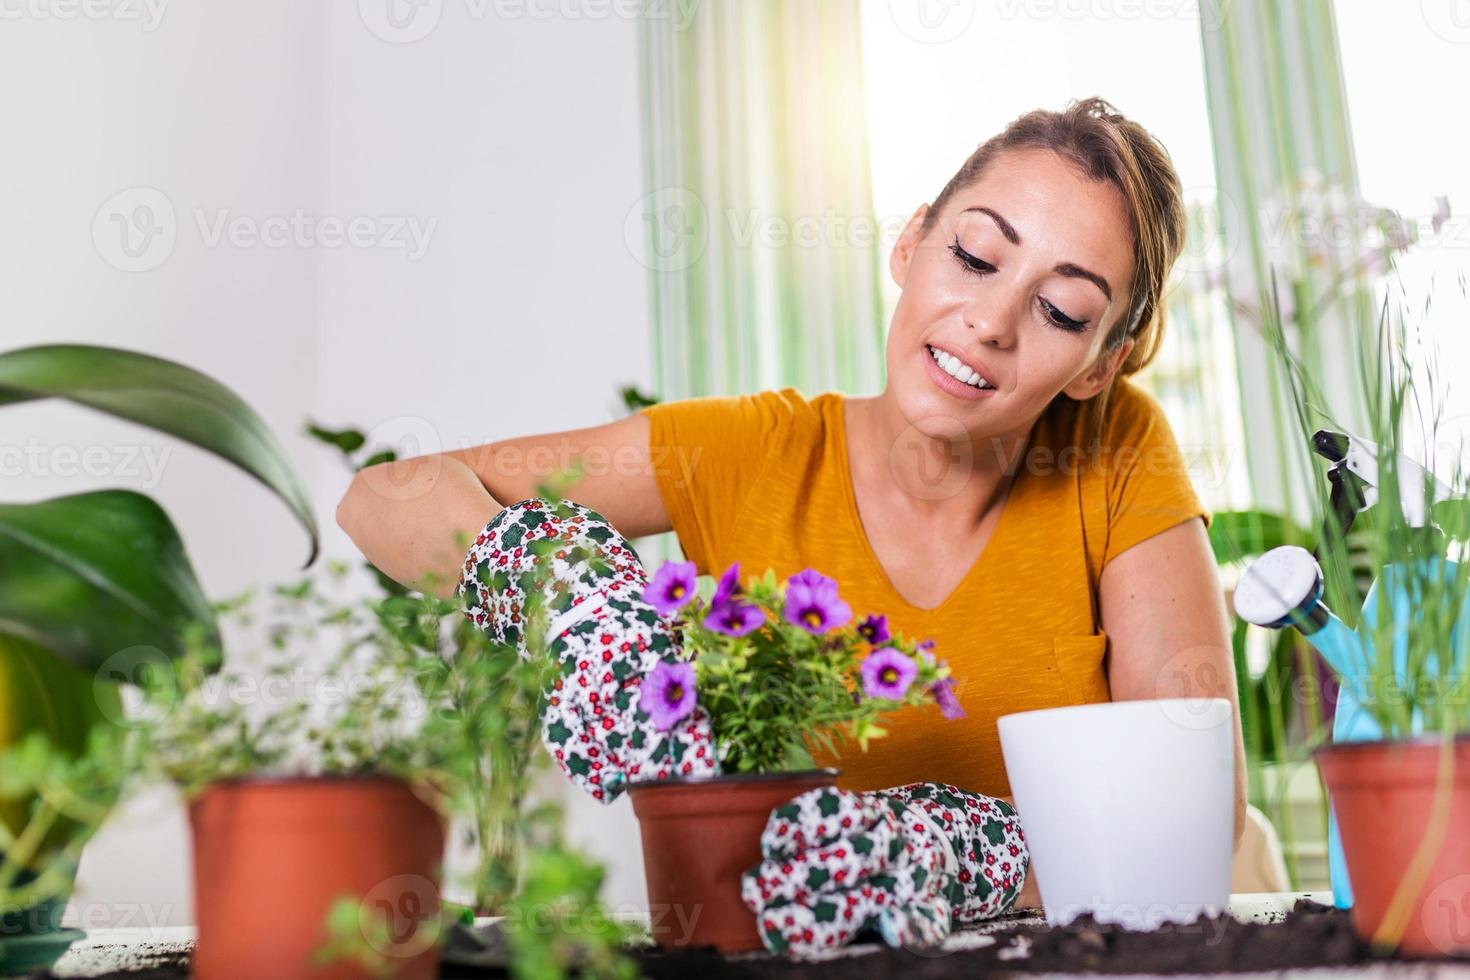 Woman preparing flowers for planting. Gardener planting flowers in pot. Young woman preparing flowers for planting during gardening work. people, gardening, flower planting and profession concept photo